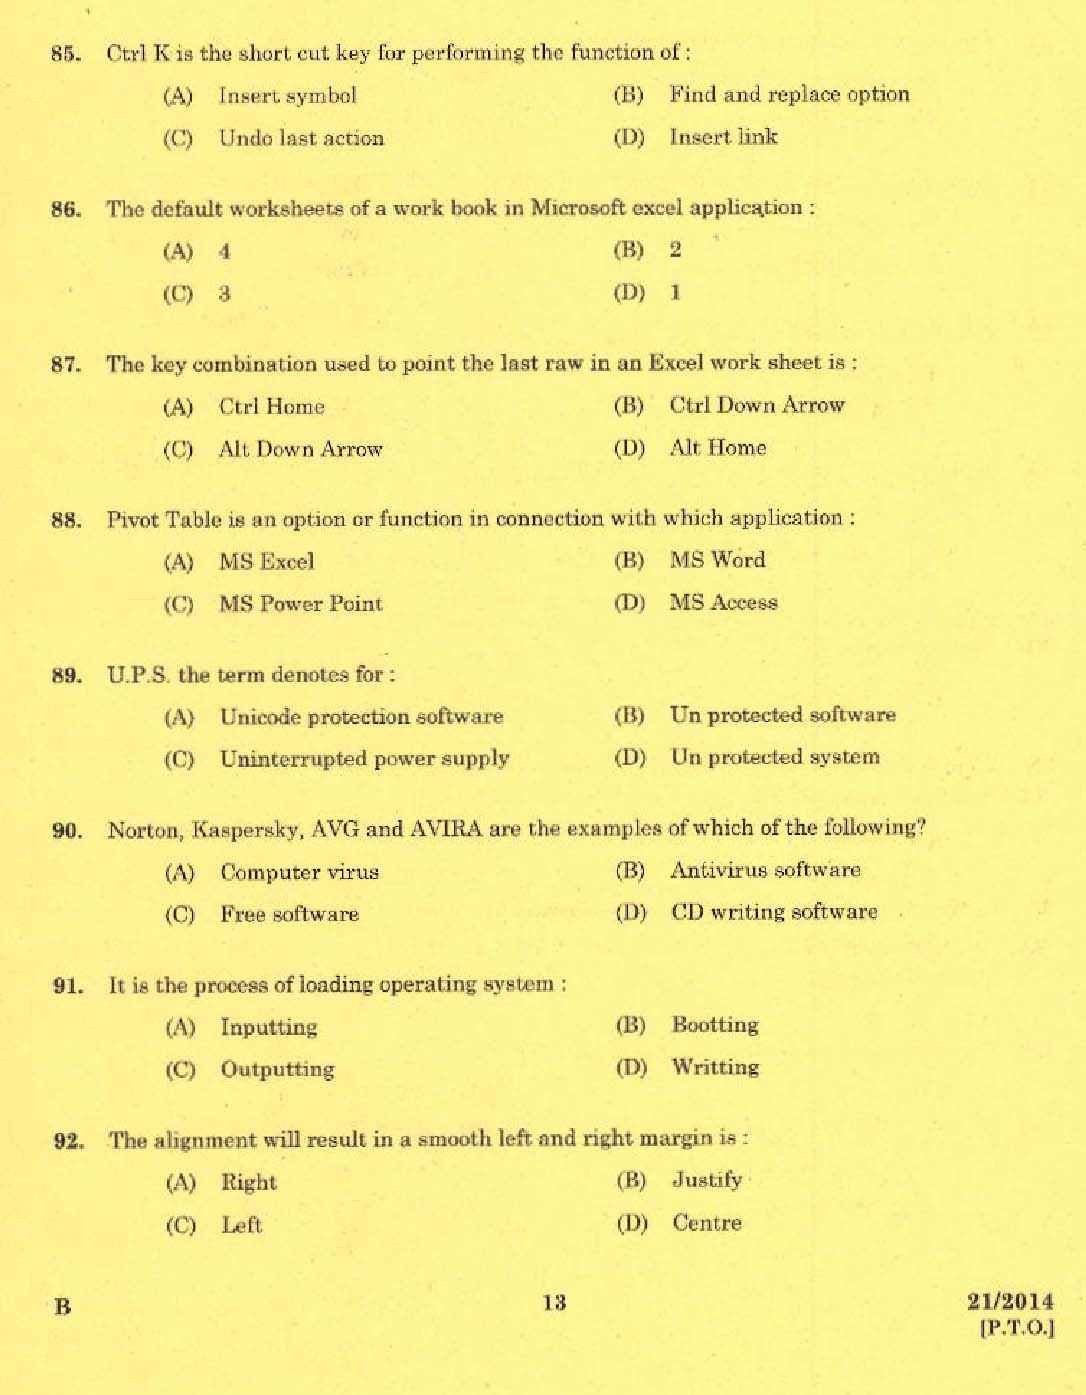 Kerala PSC Stenographer Grade II Exam 2014 Question Paper Code 212014 11